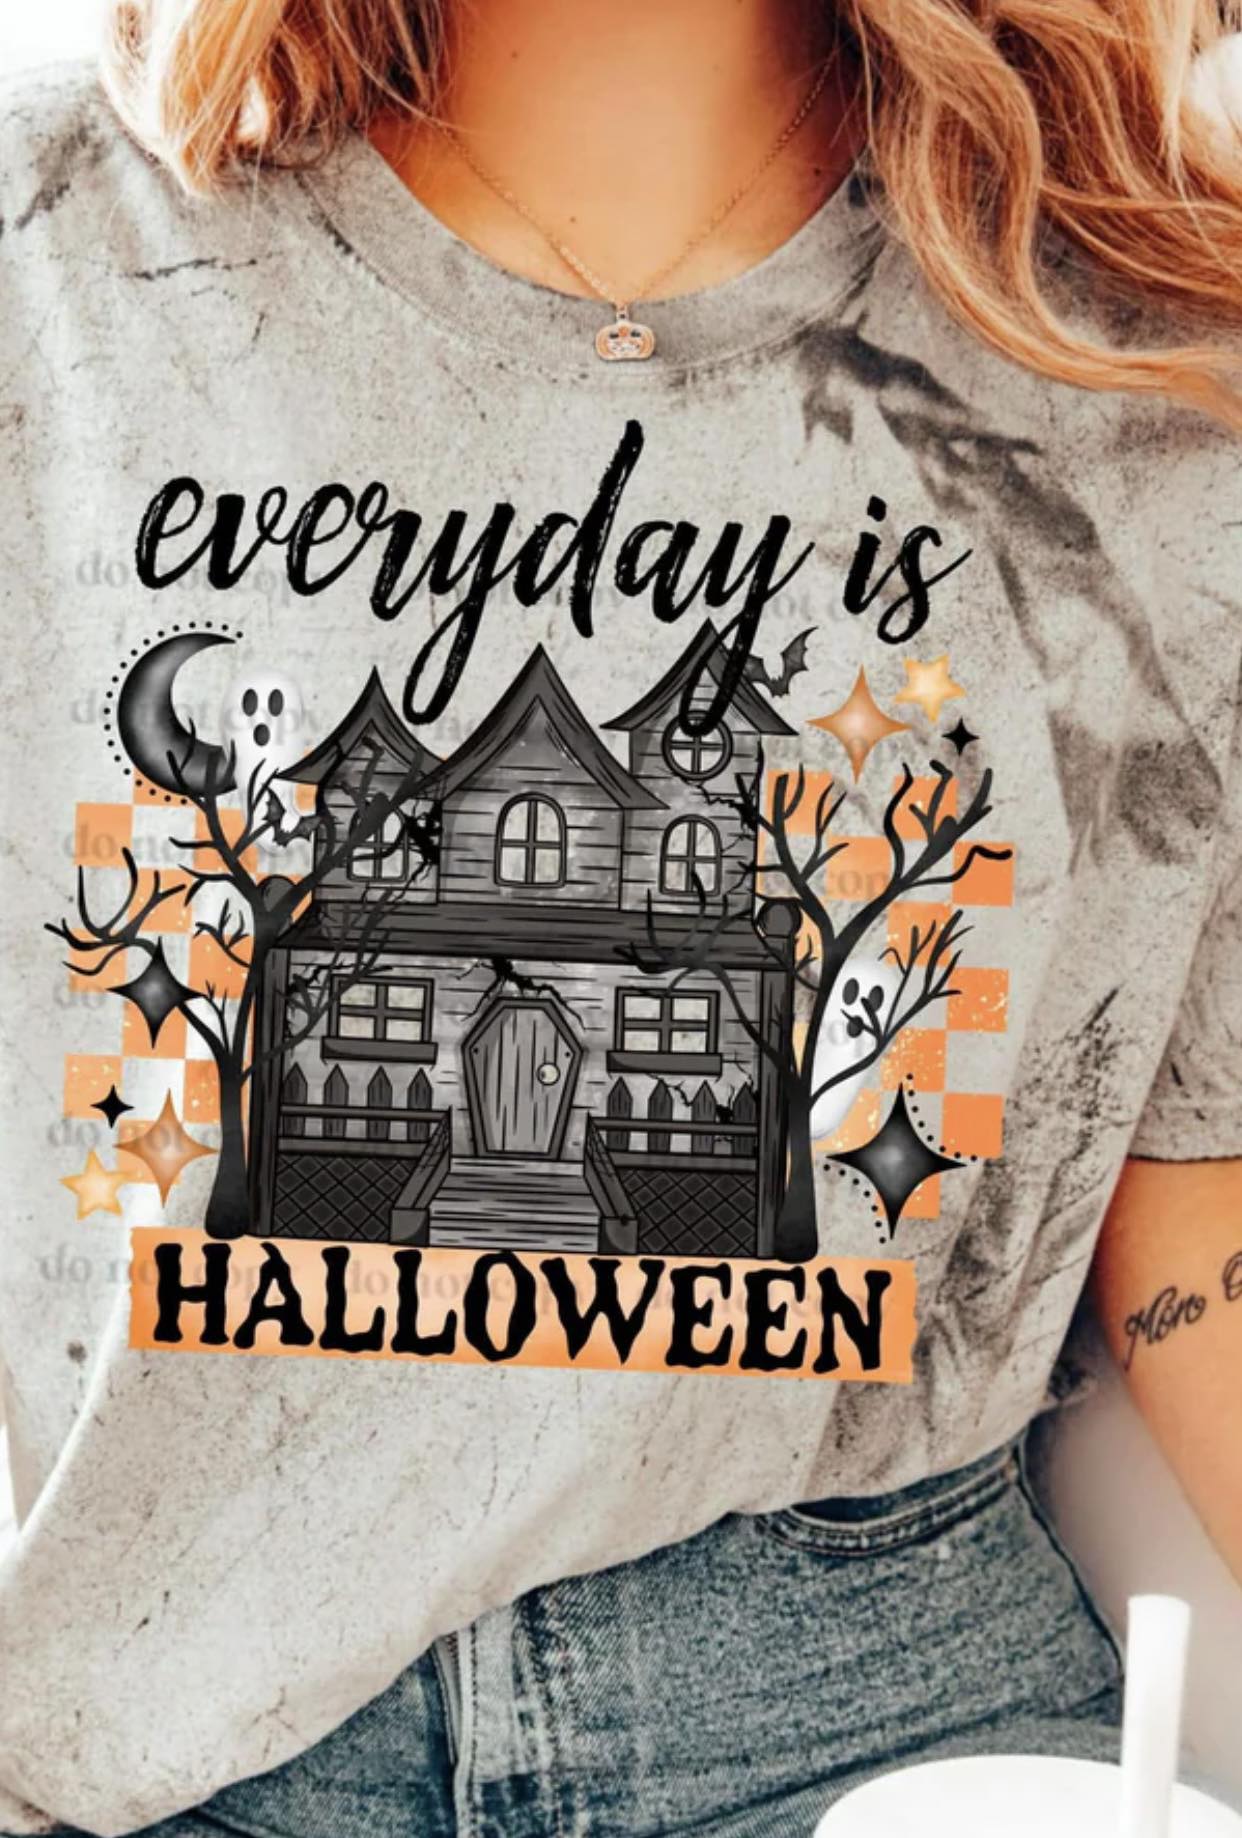 Everyday is Halloween!